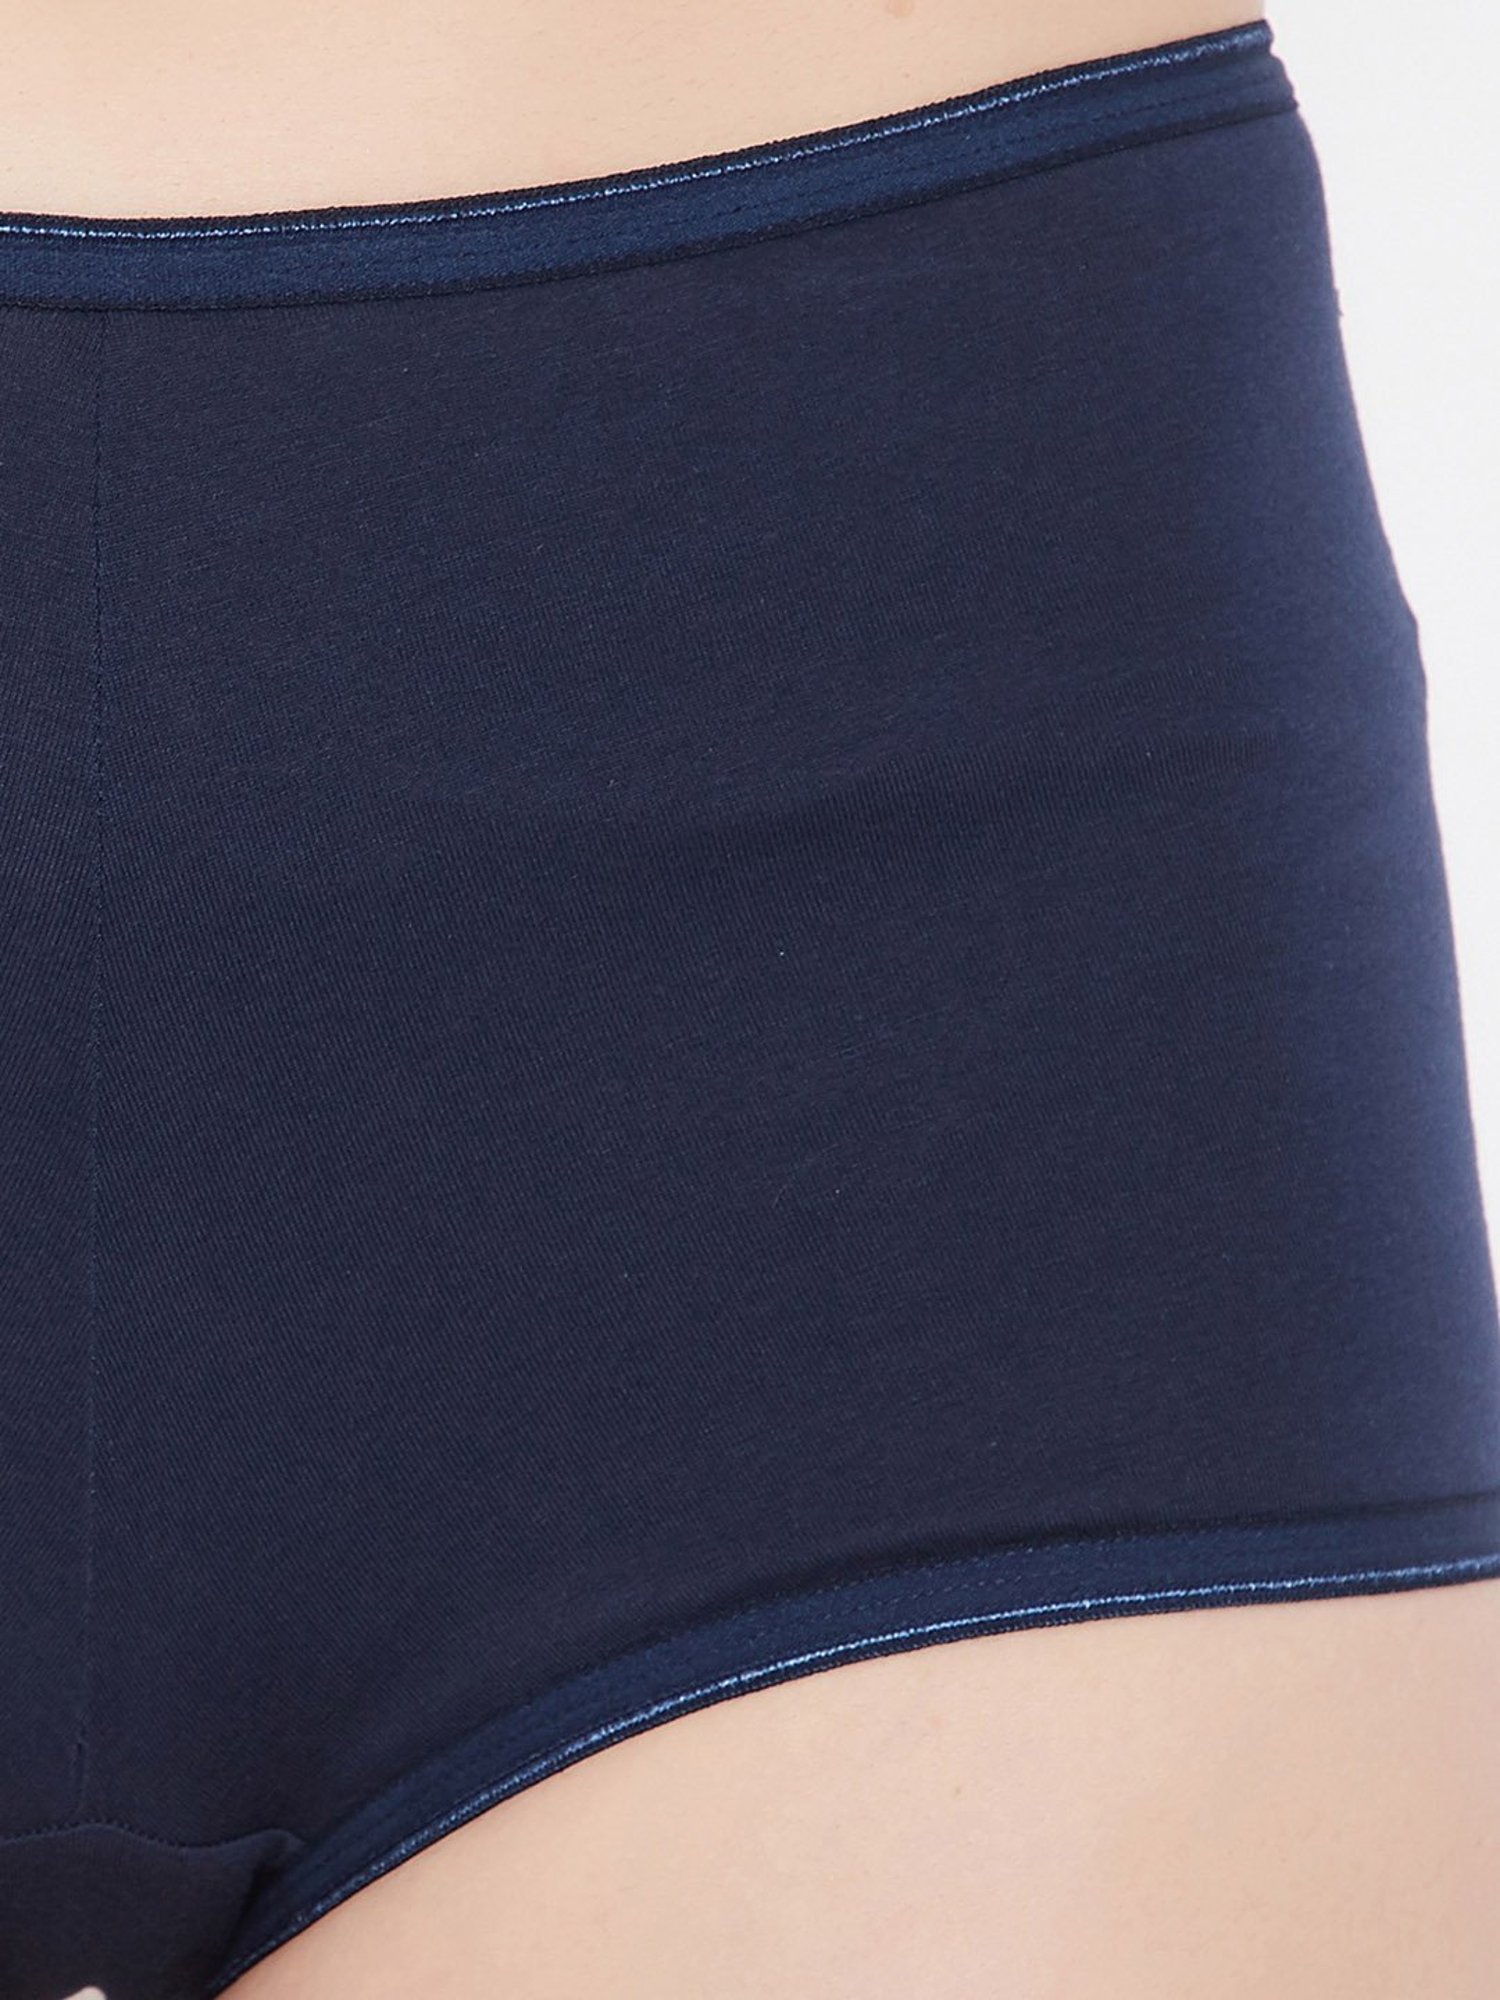 Buy Clovia Blue Cotton Boyshorts Panty for Women Online @ Tata CLiQ